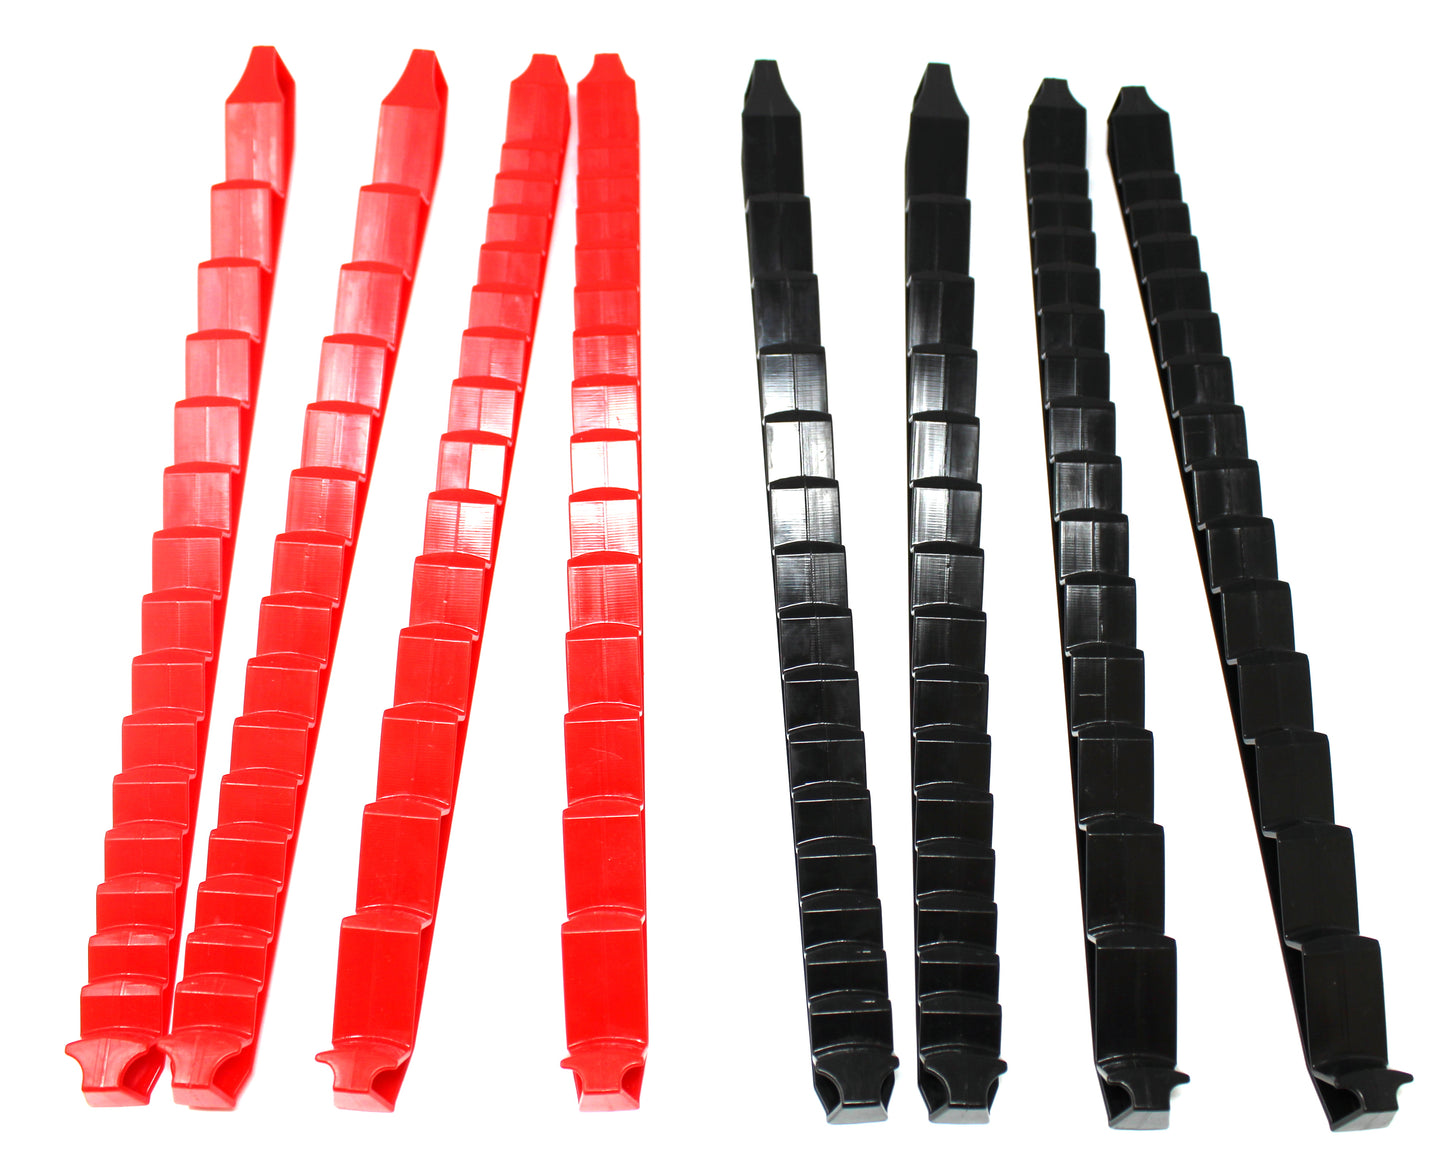 Low Profile Plastic 30 Tool Wrench Organizer Rail 8-Piece Kit - Black & Red JSP